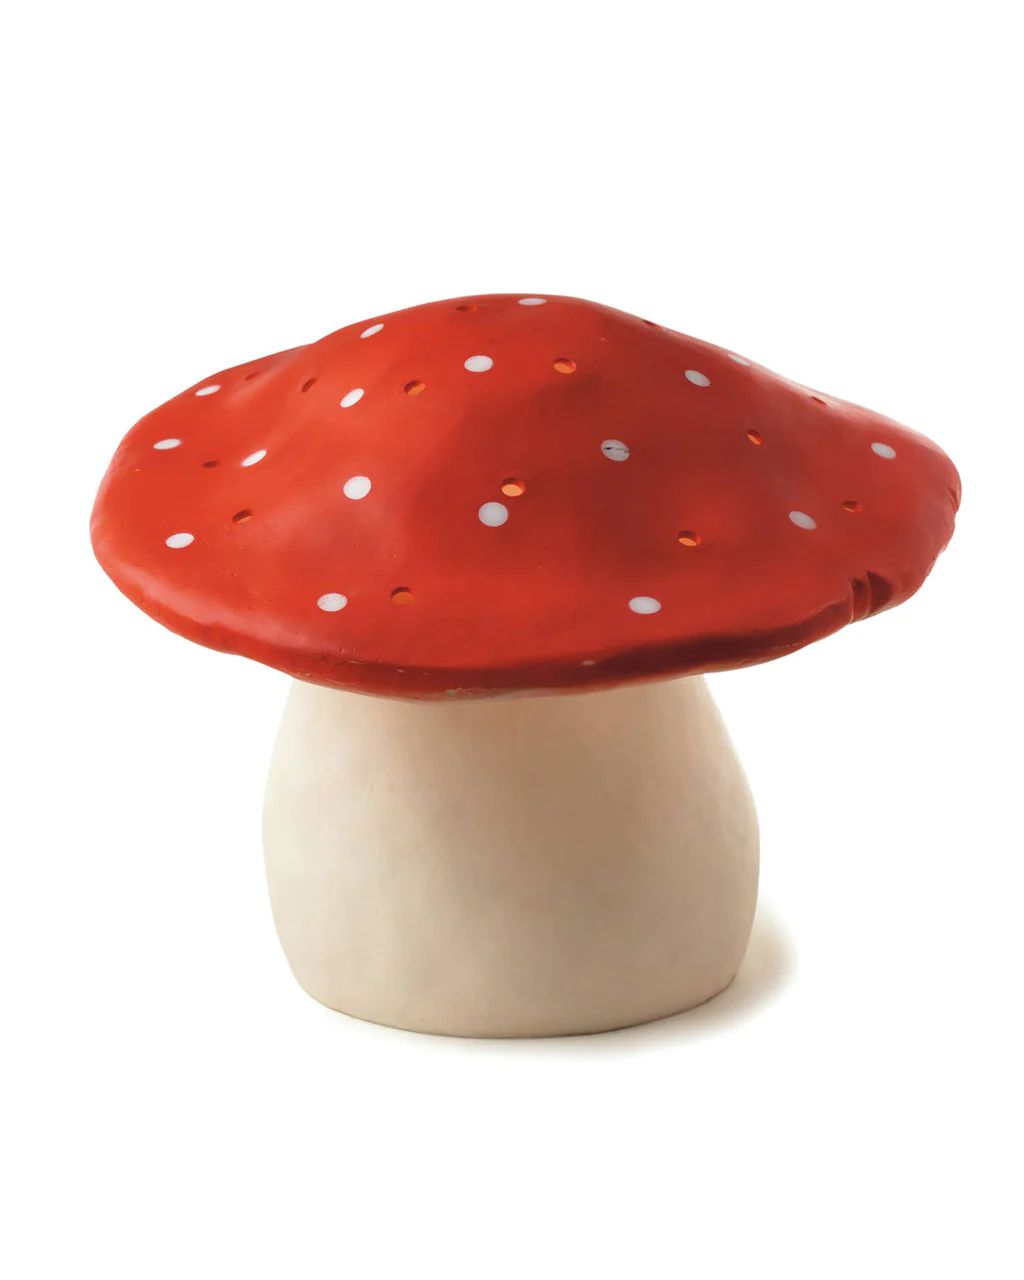 Medium Red Mushroom Lamp | ban.do